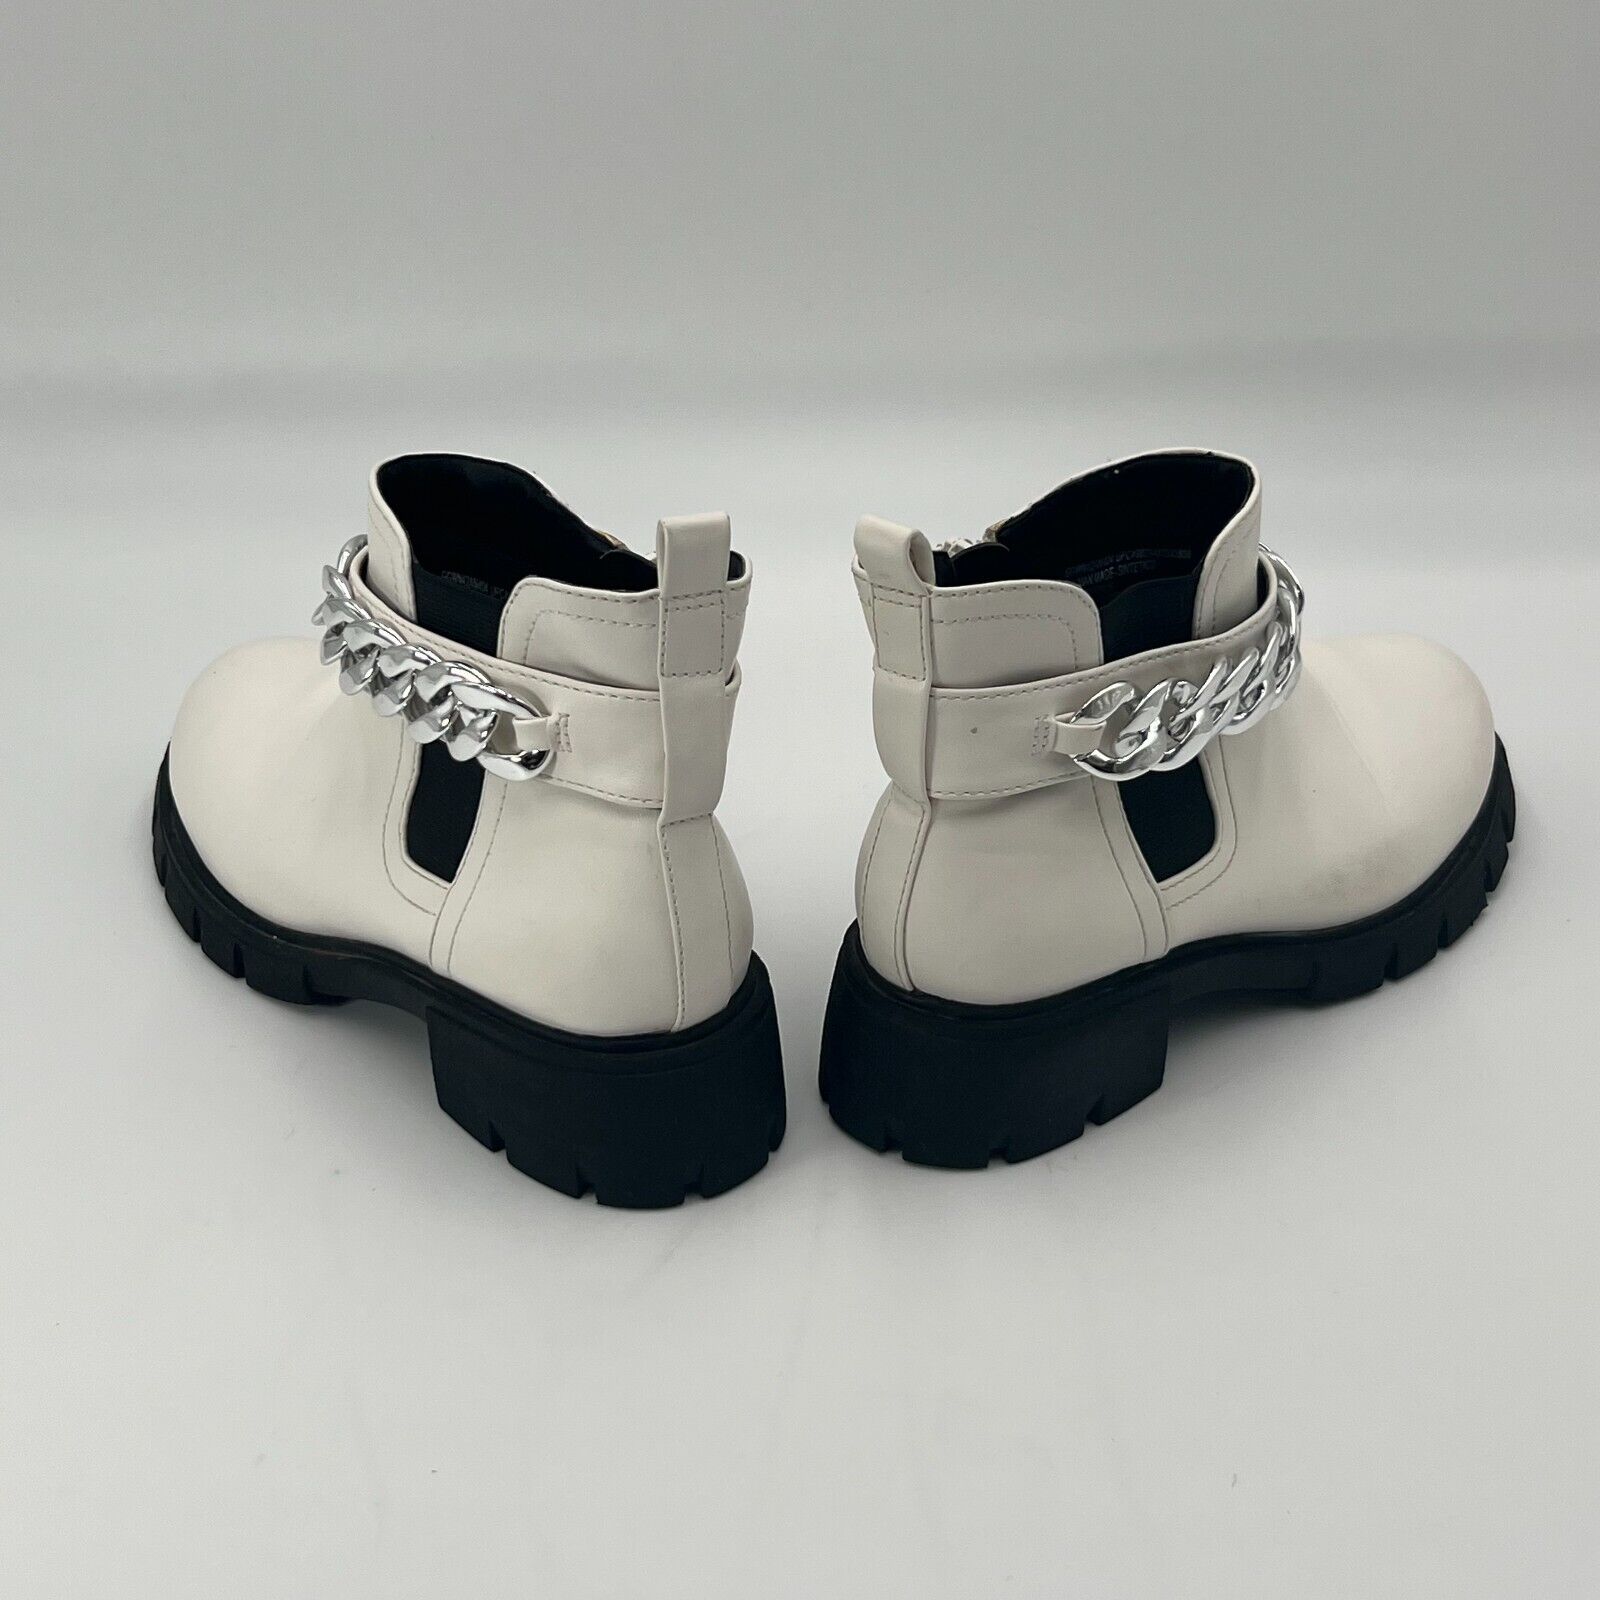 Cushionaire Clover White Black Slip On Chain Strap Comfort Boot Womens Size 5